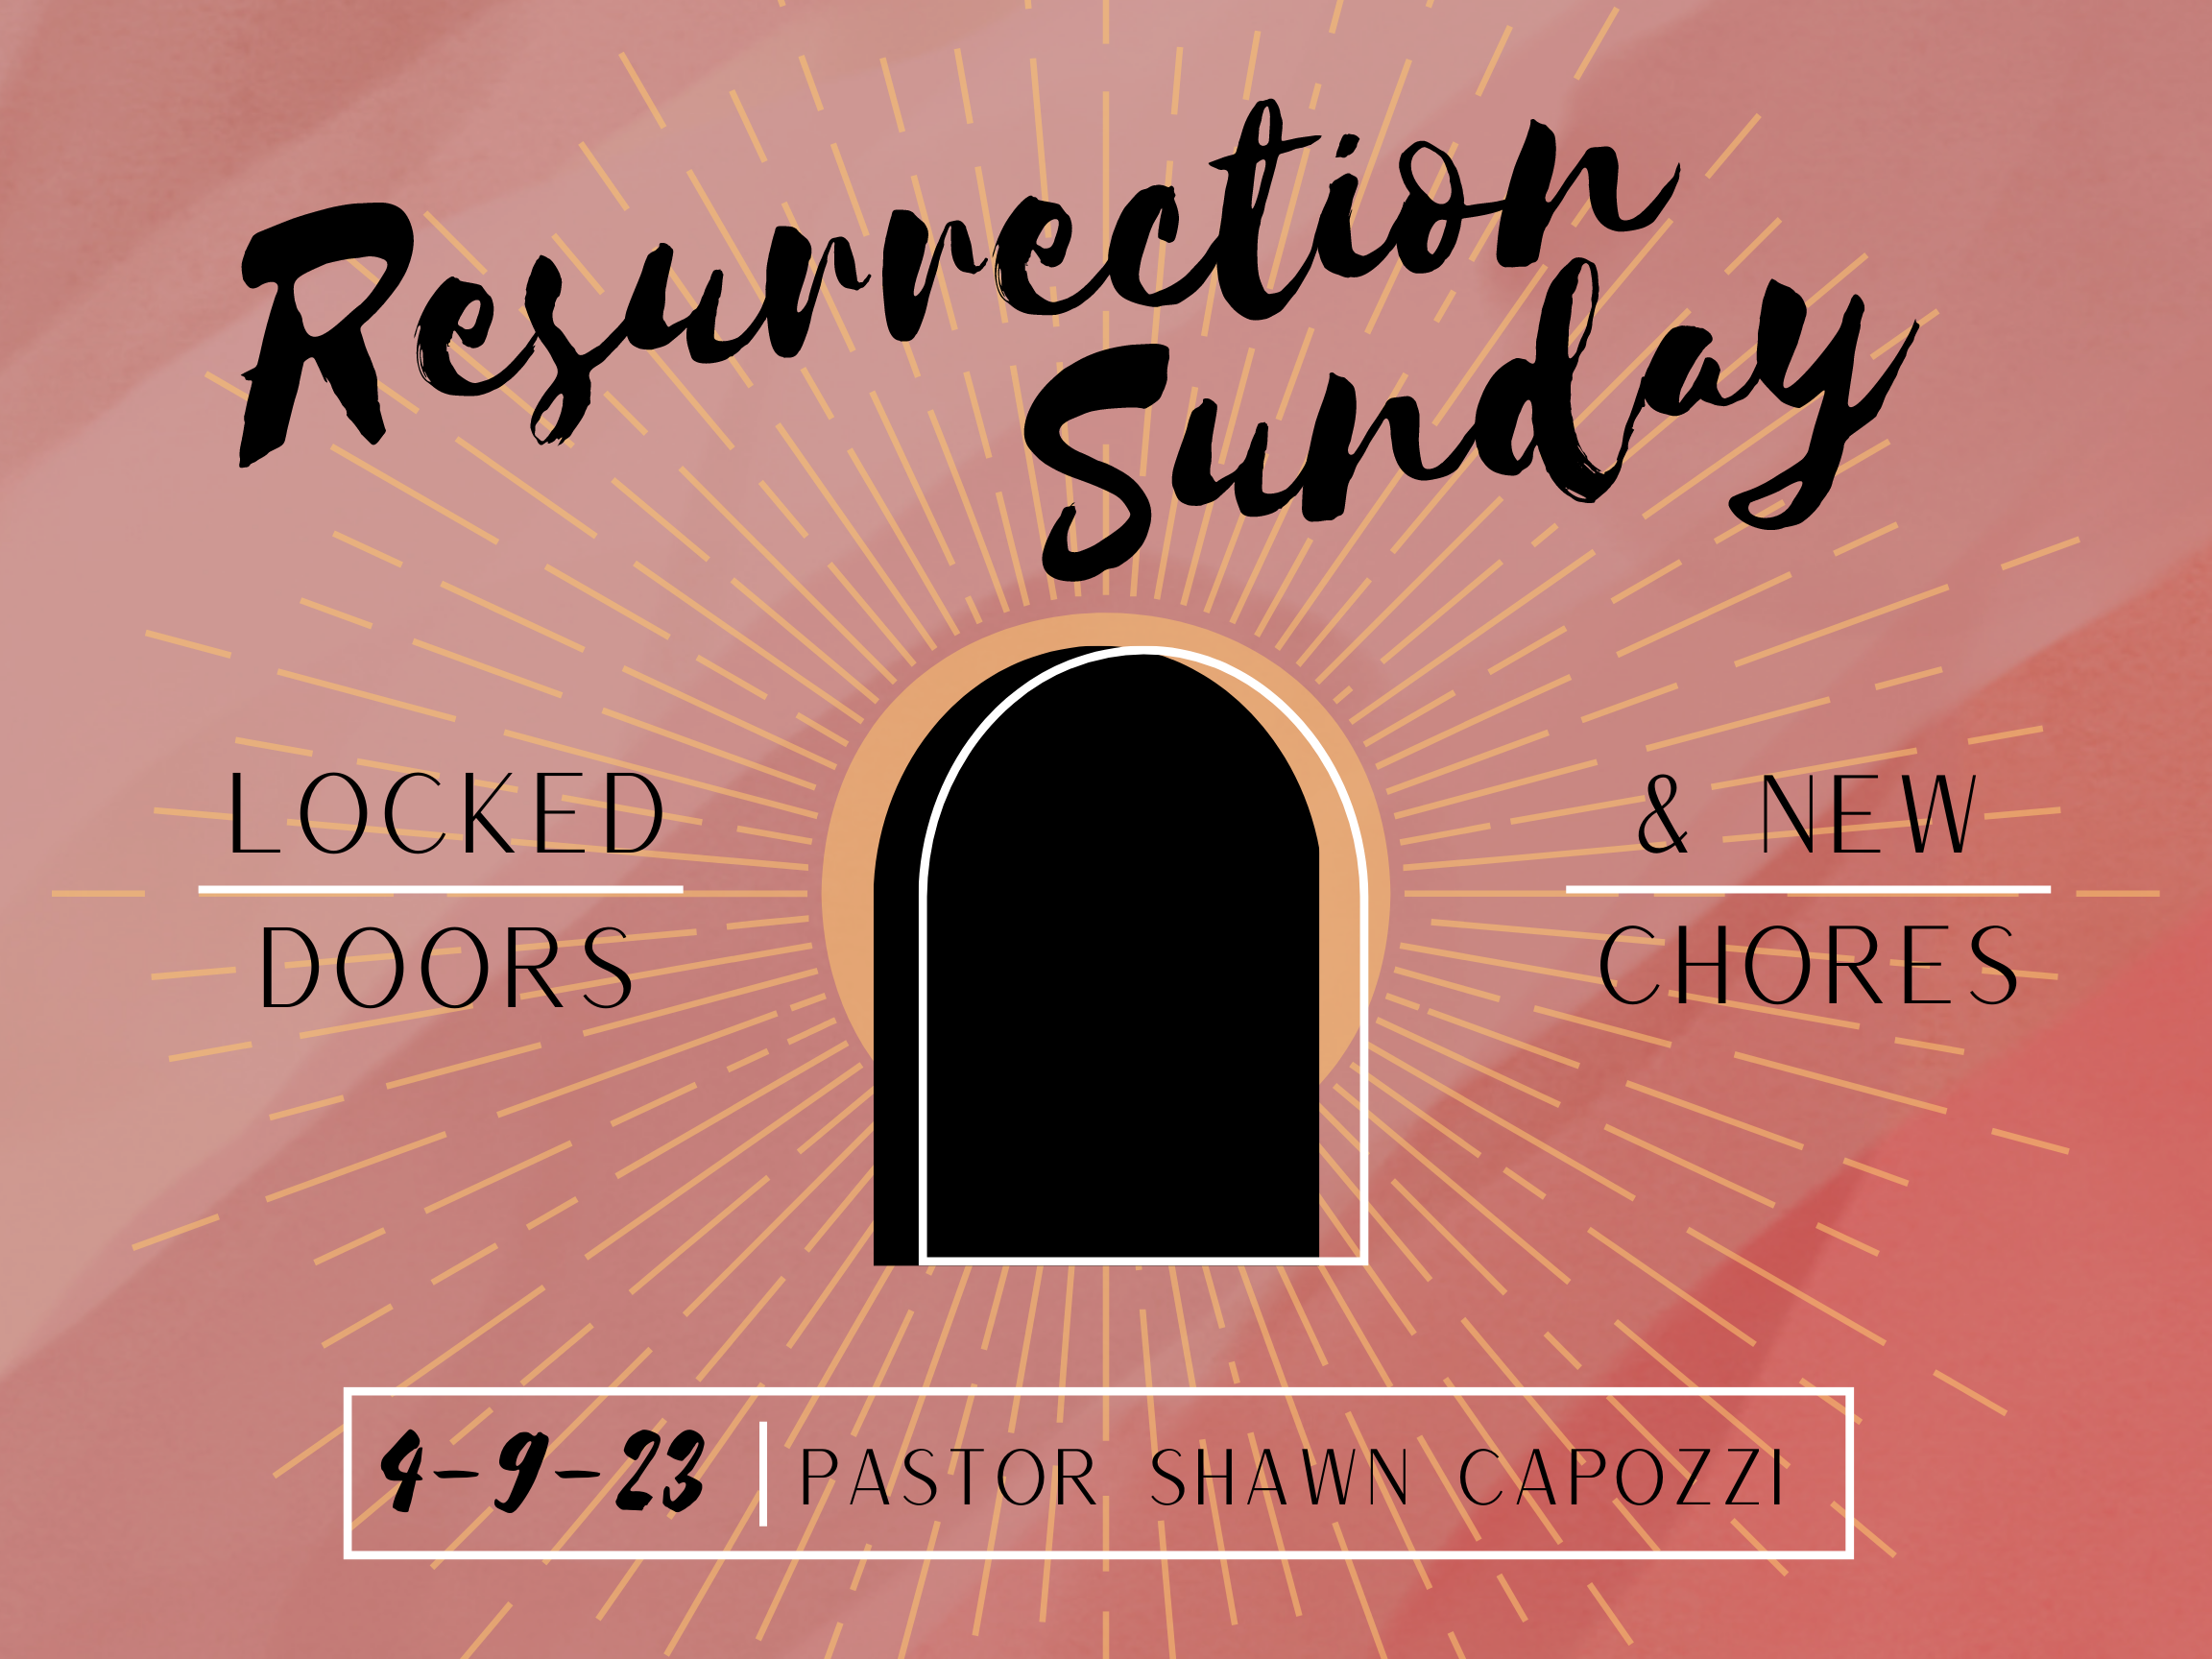 Resurrection Sunday - Locked Doors and New Chores